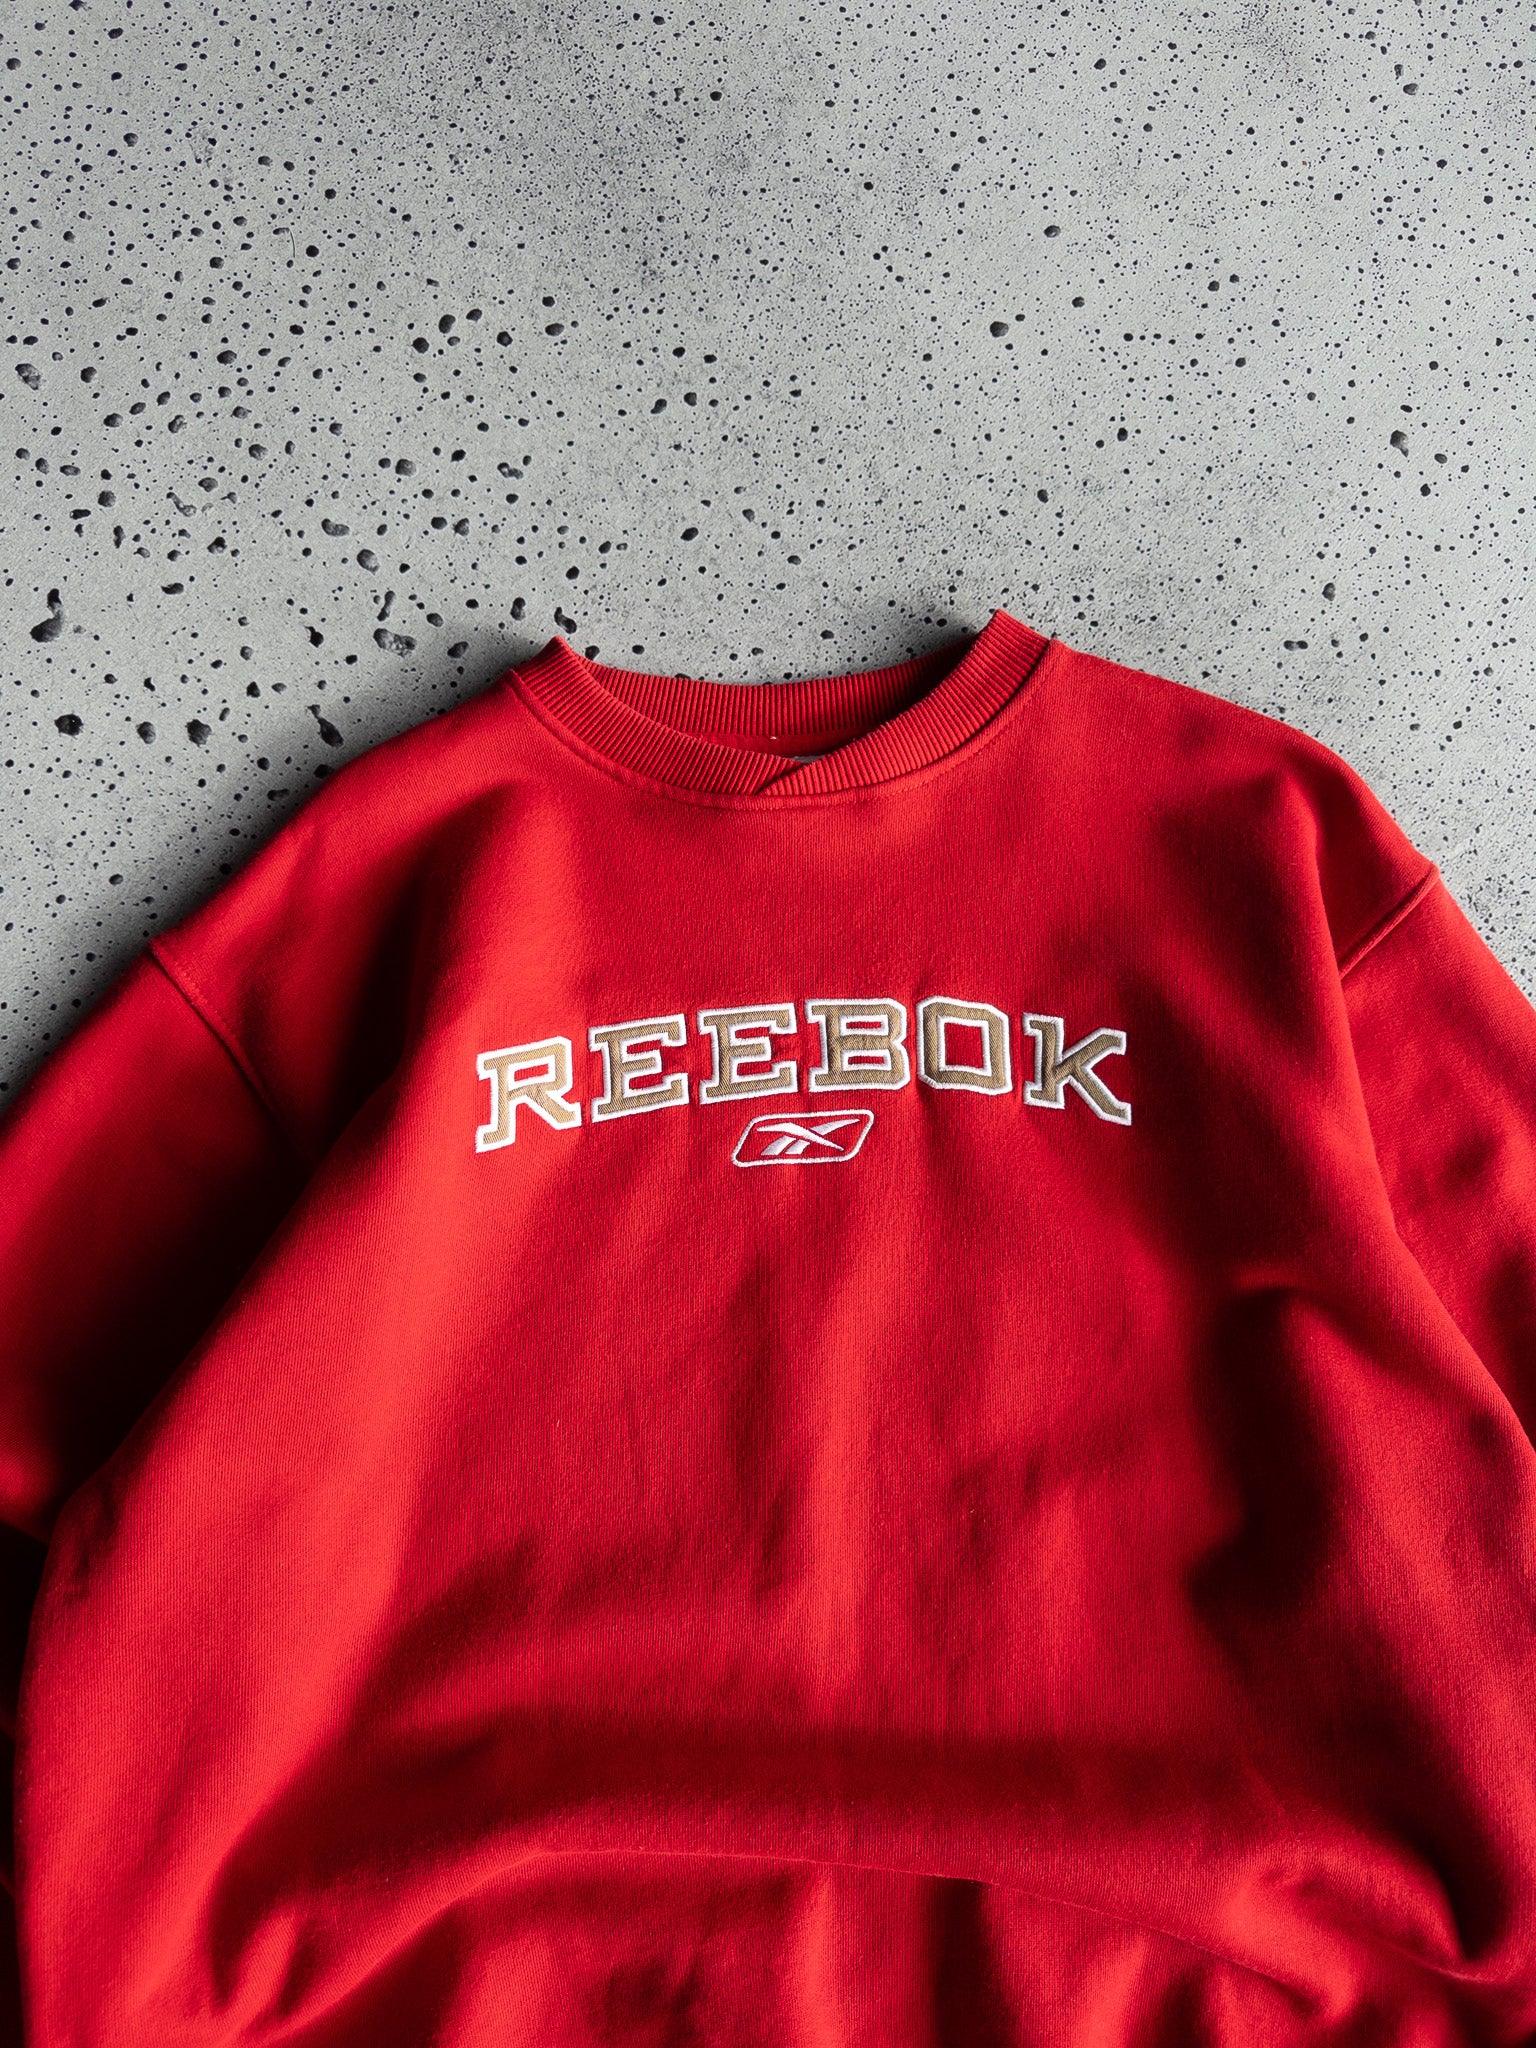 Vintage Reebok Sweatshirt (L) - Planet Vintage Store